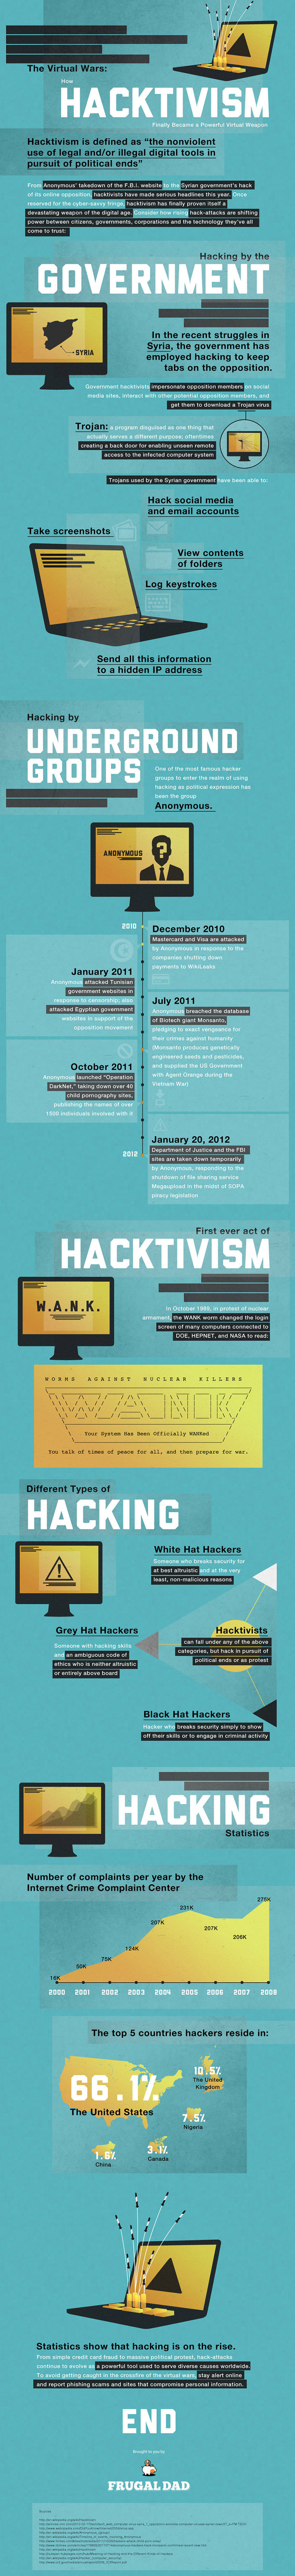 Hacktivism. look at the tags.